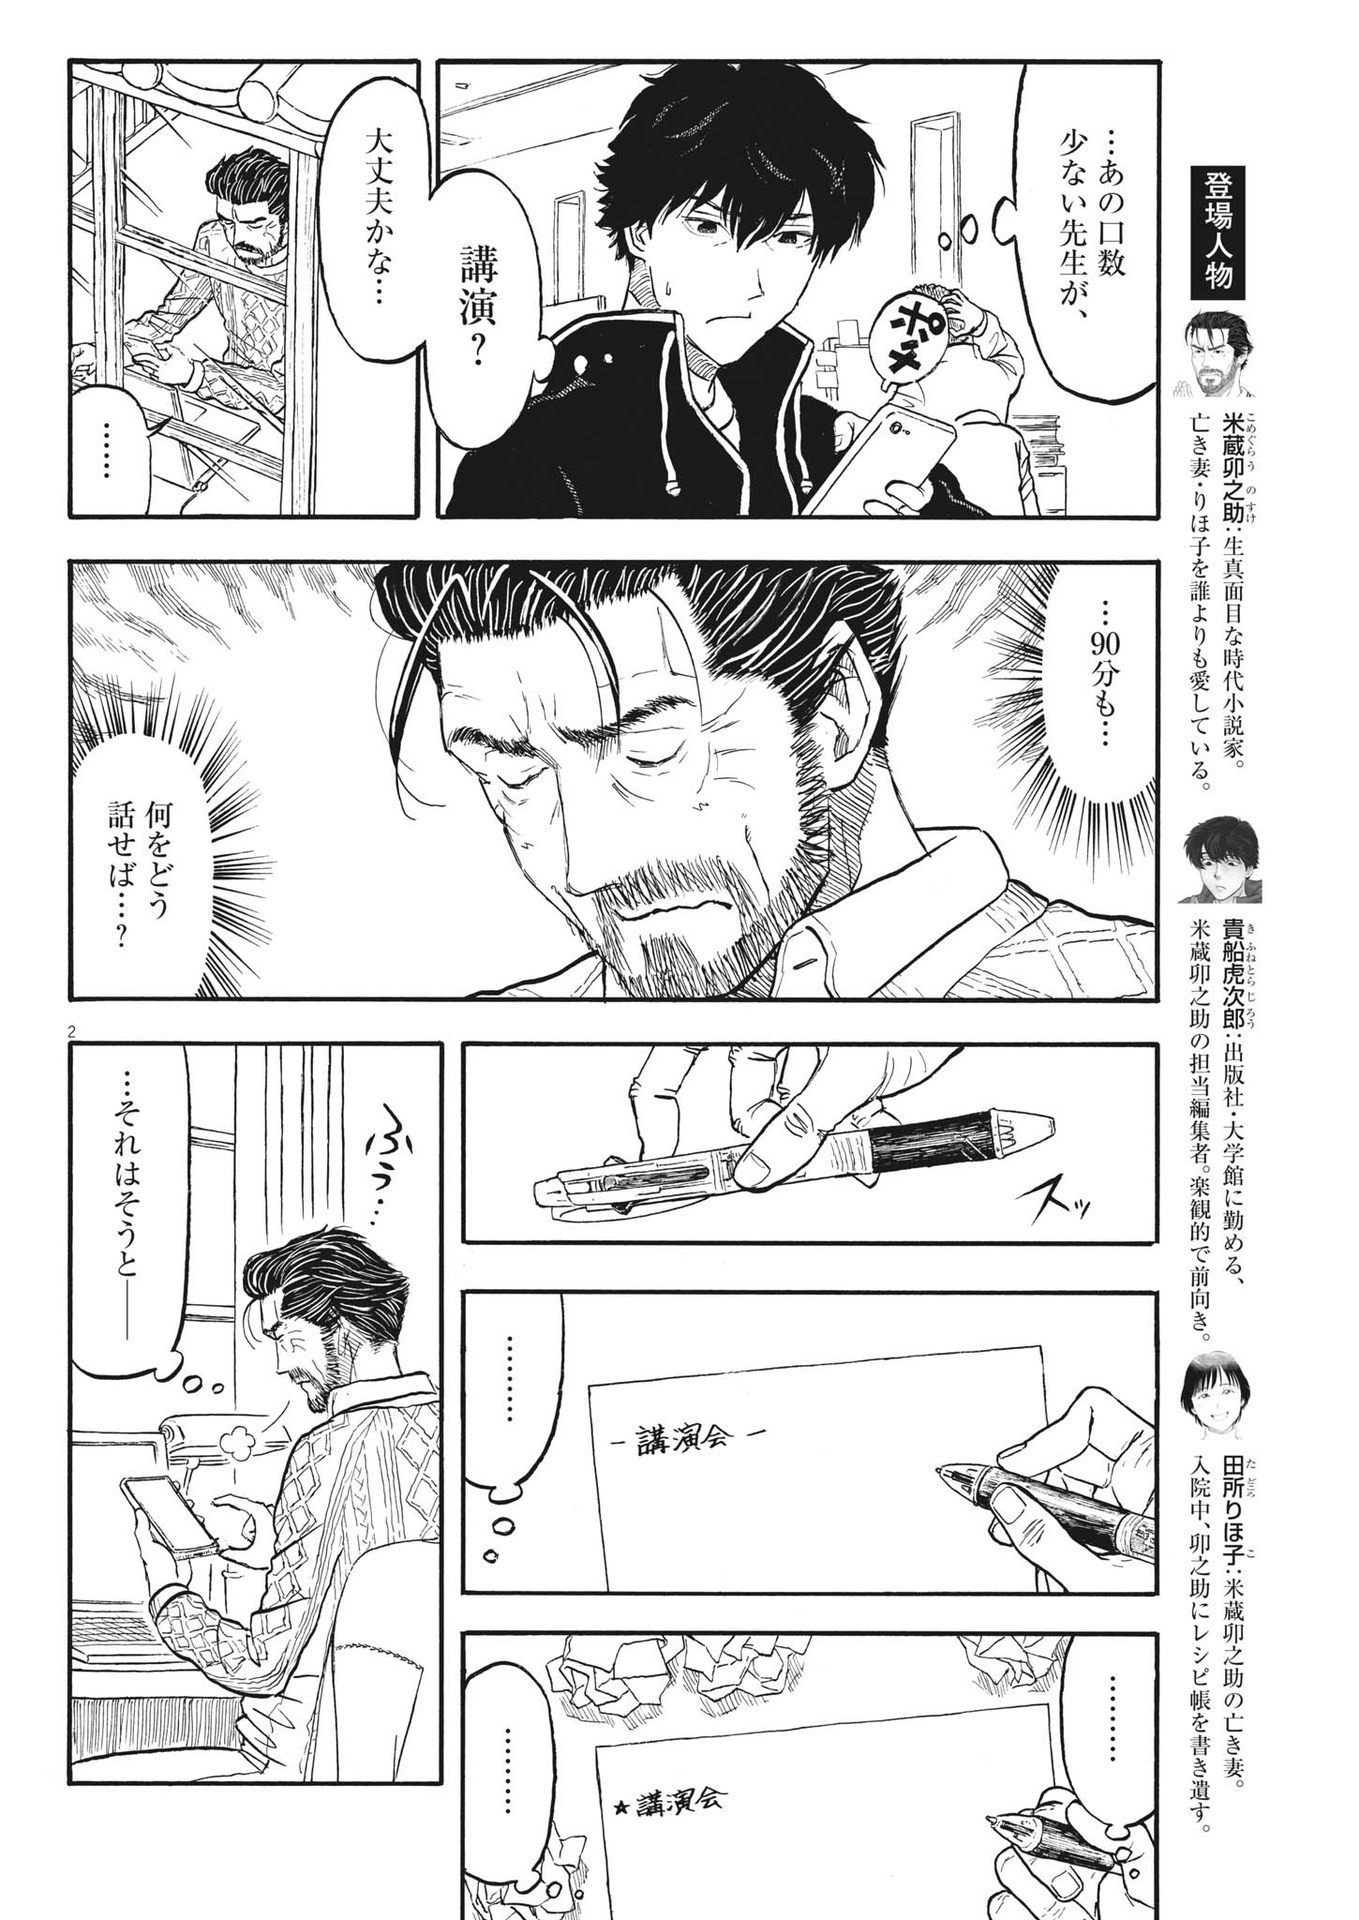 Komegura Fuufu no Recipe-chou - Chapter 30 - Page 2